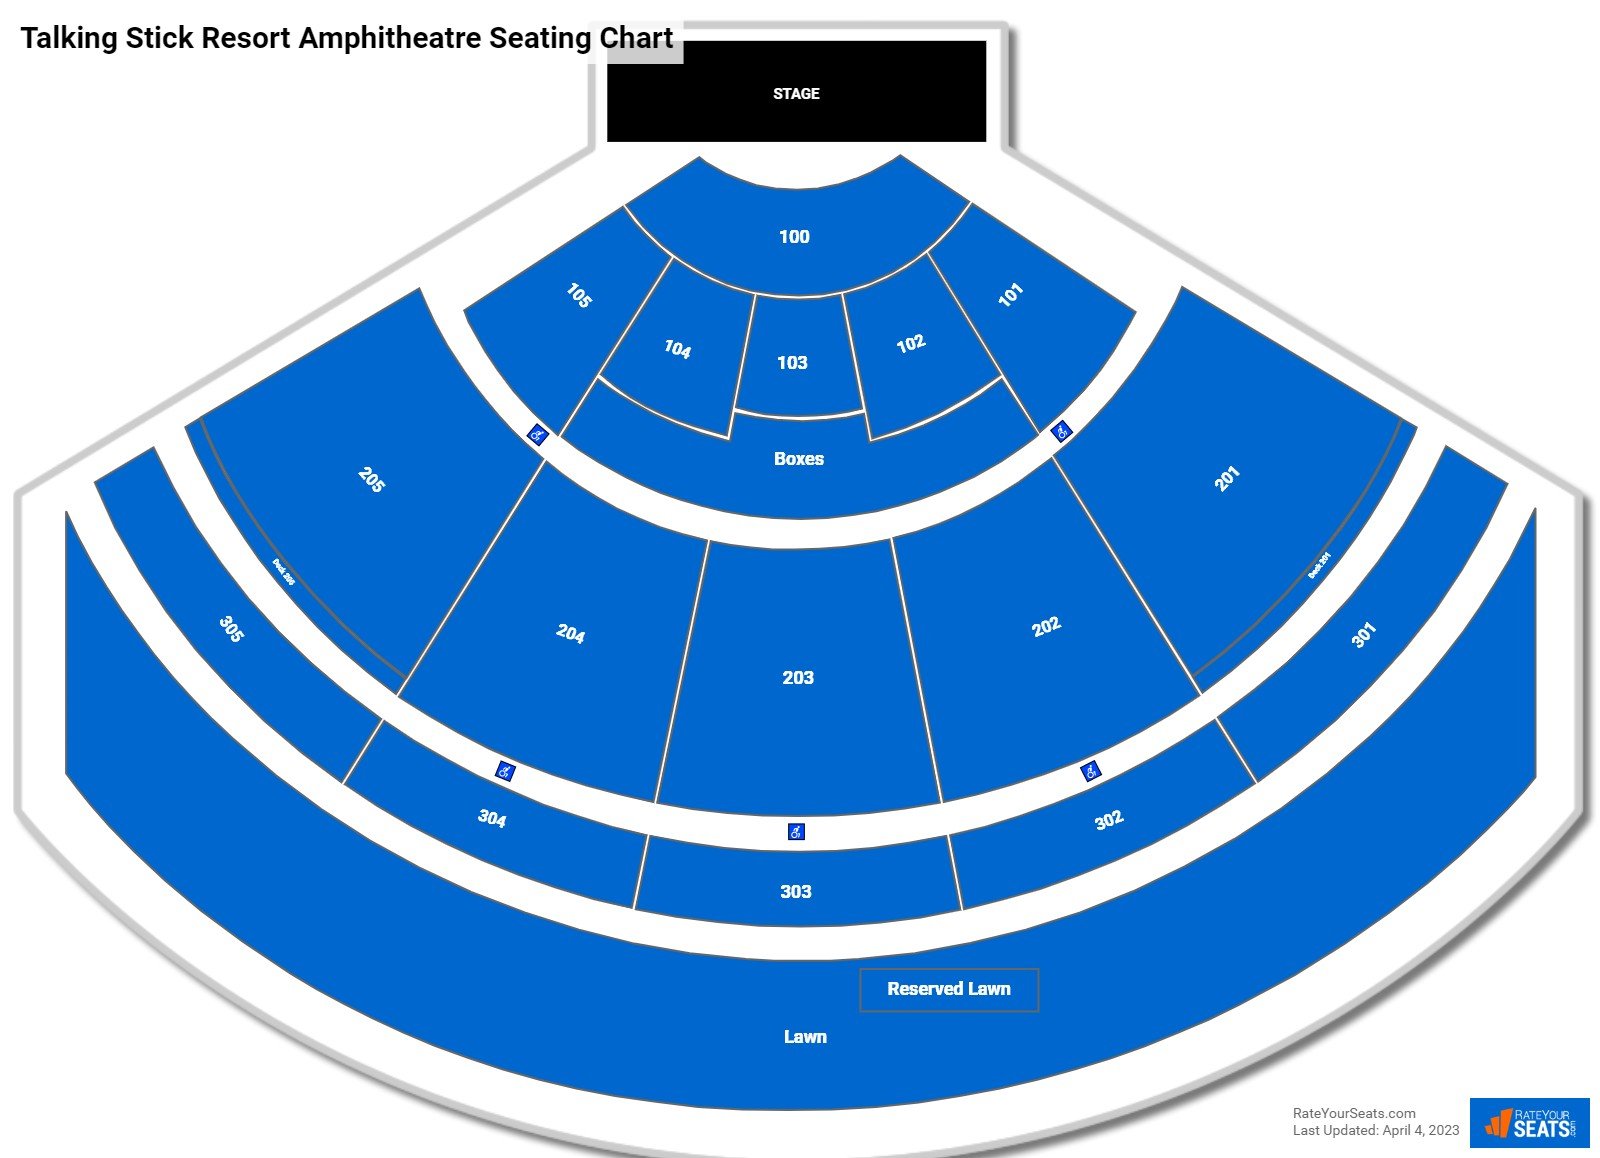 Ak-Chin Pavilion Concert Seating Chart